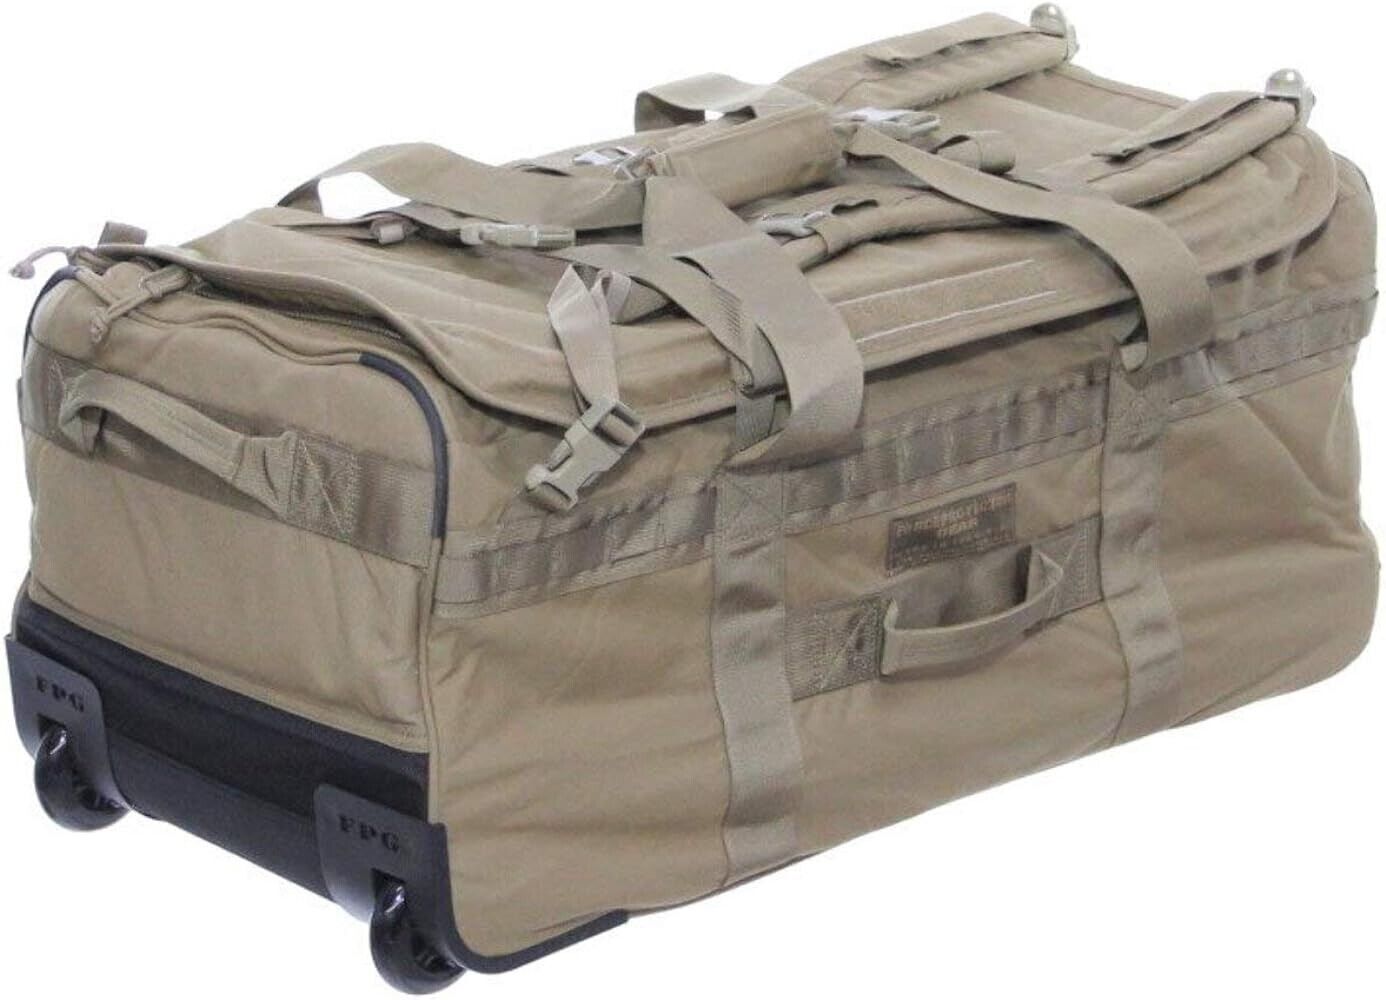 Imperfect USMC Force Protector Gear Deployer USGI Deployment Bag on Wheels